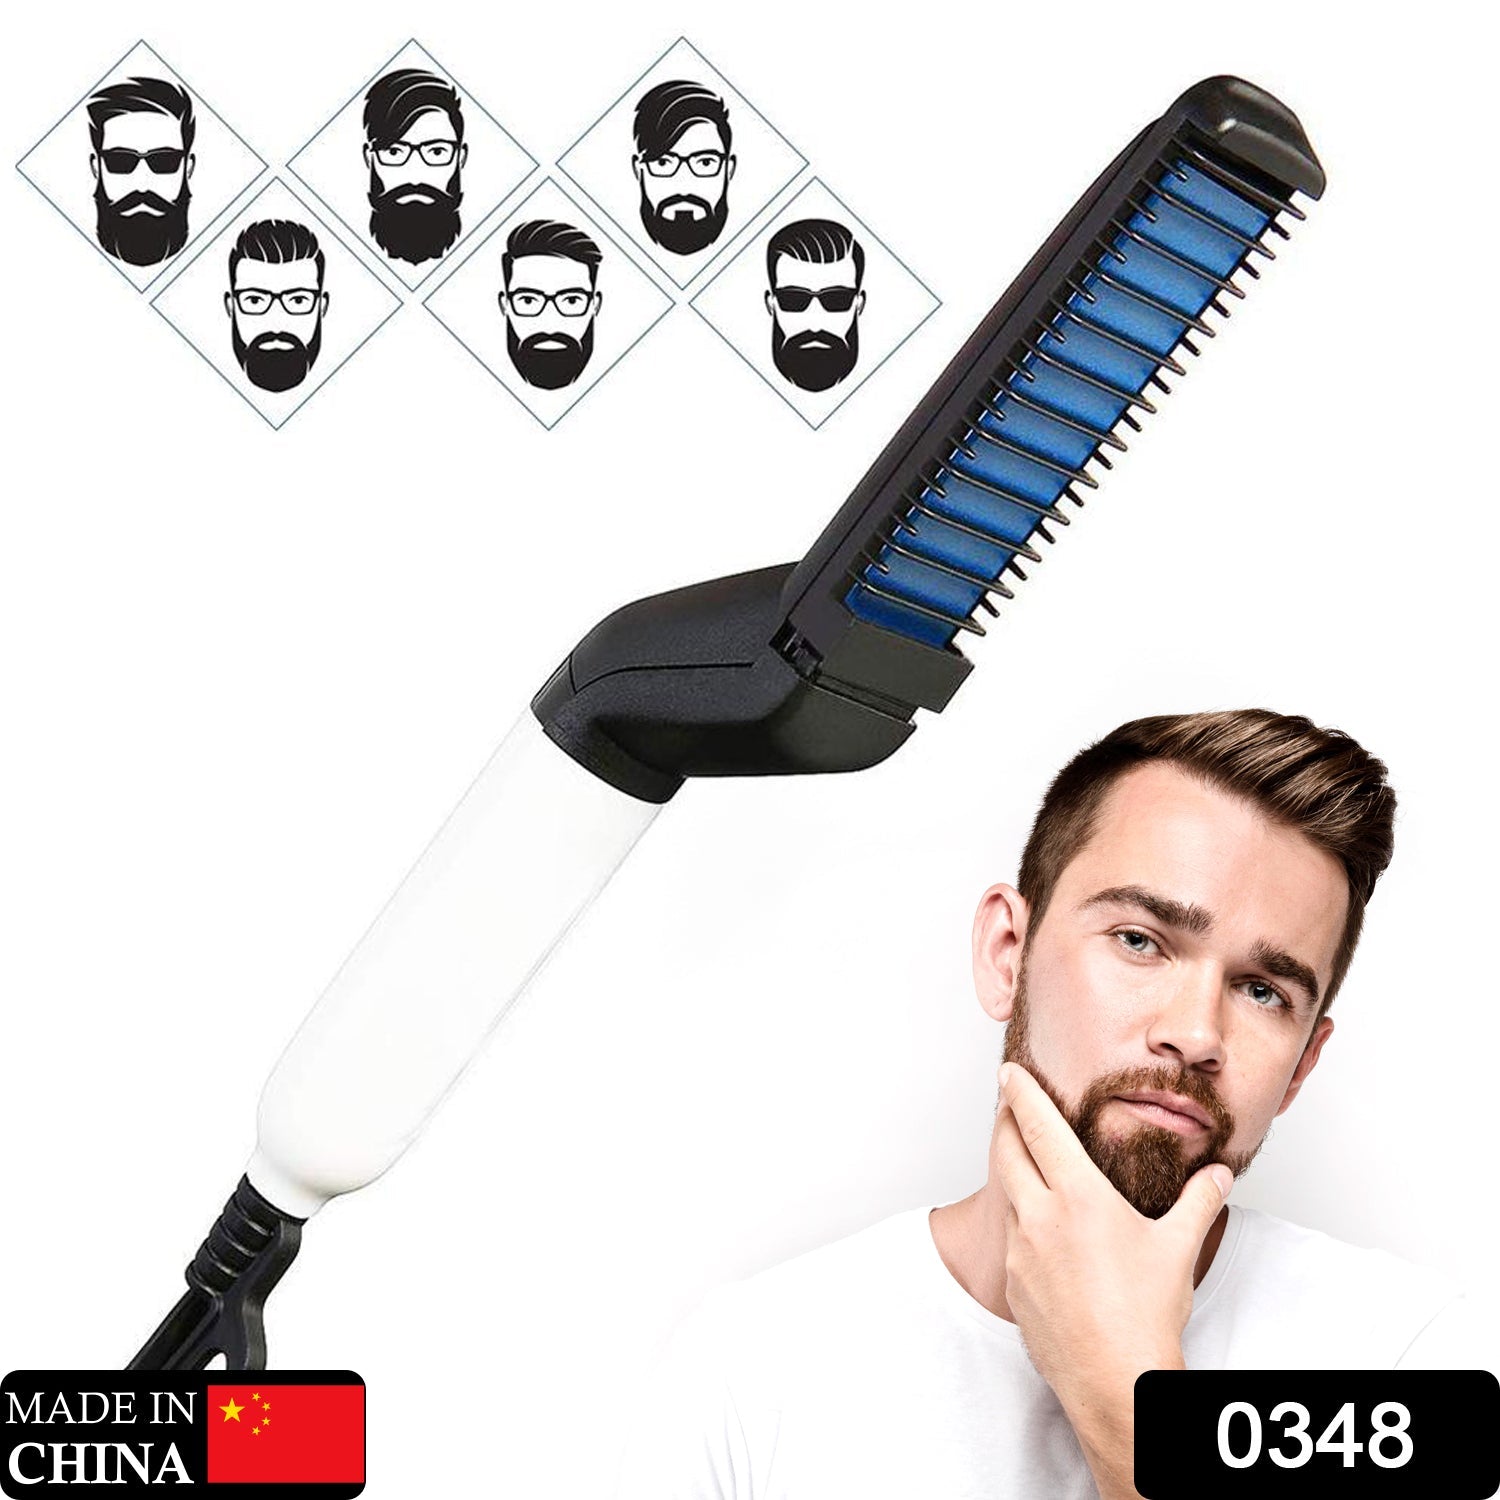 Men's Beard and Hair Curling Straightener (Modelling Comb)